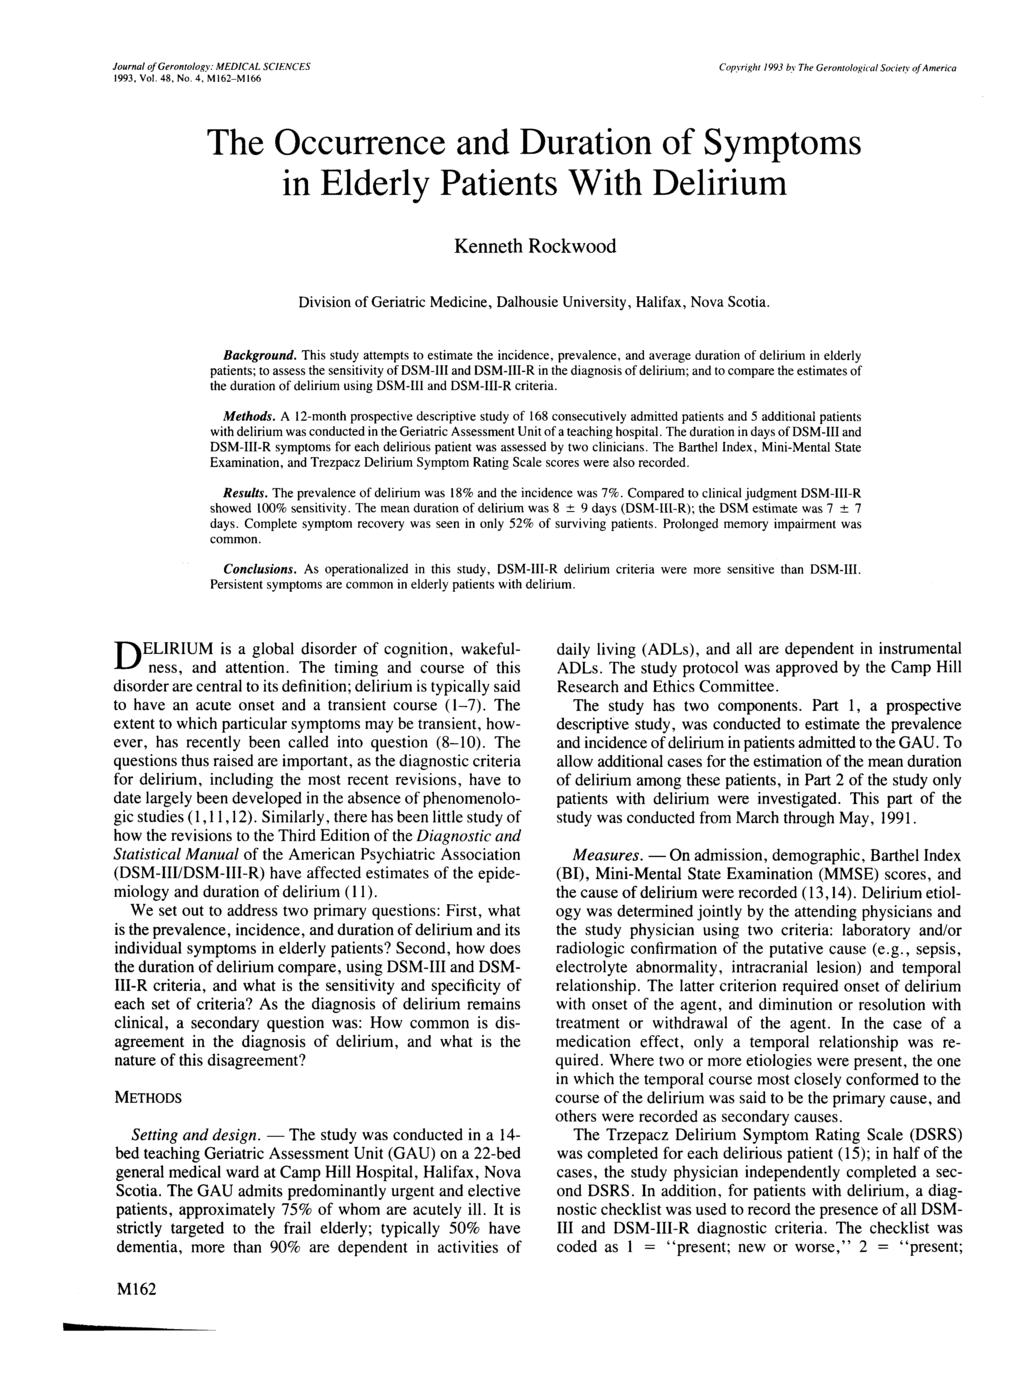 Journal of Gerontology: MEDICAL SCIENCES 1993, Vol. 48, No.